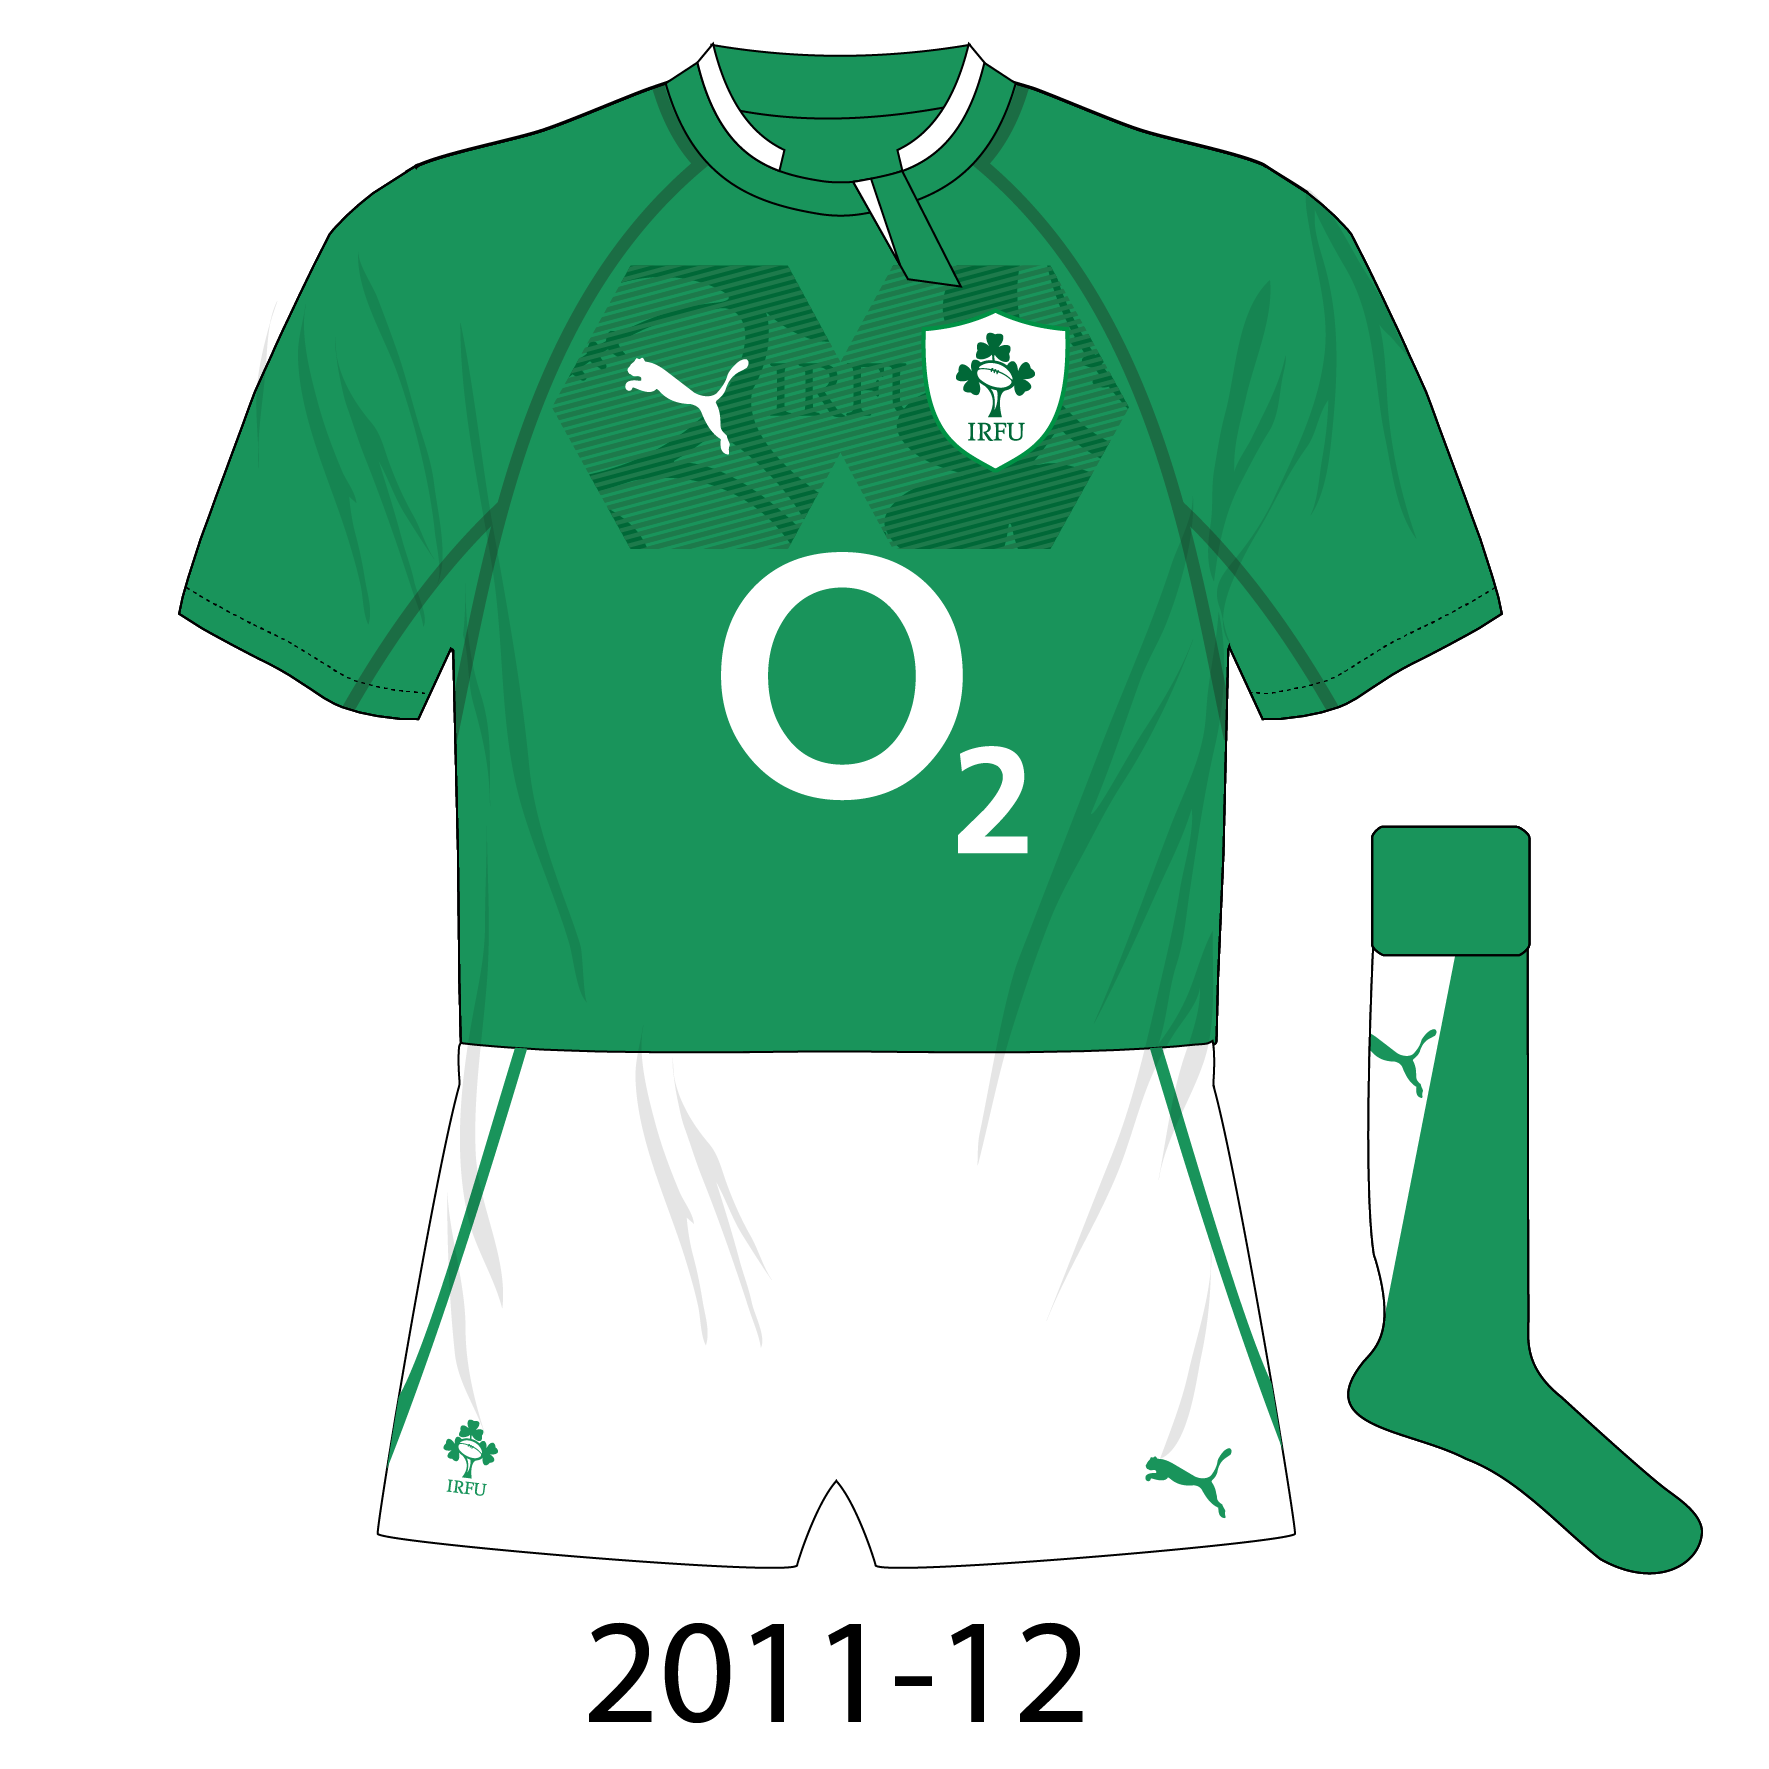 puma ireland rugby jersey